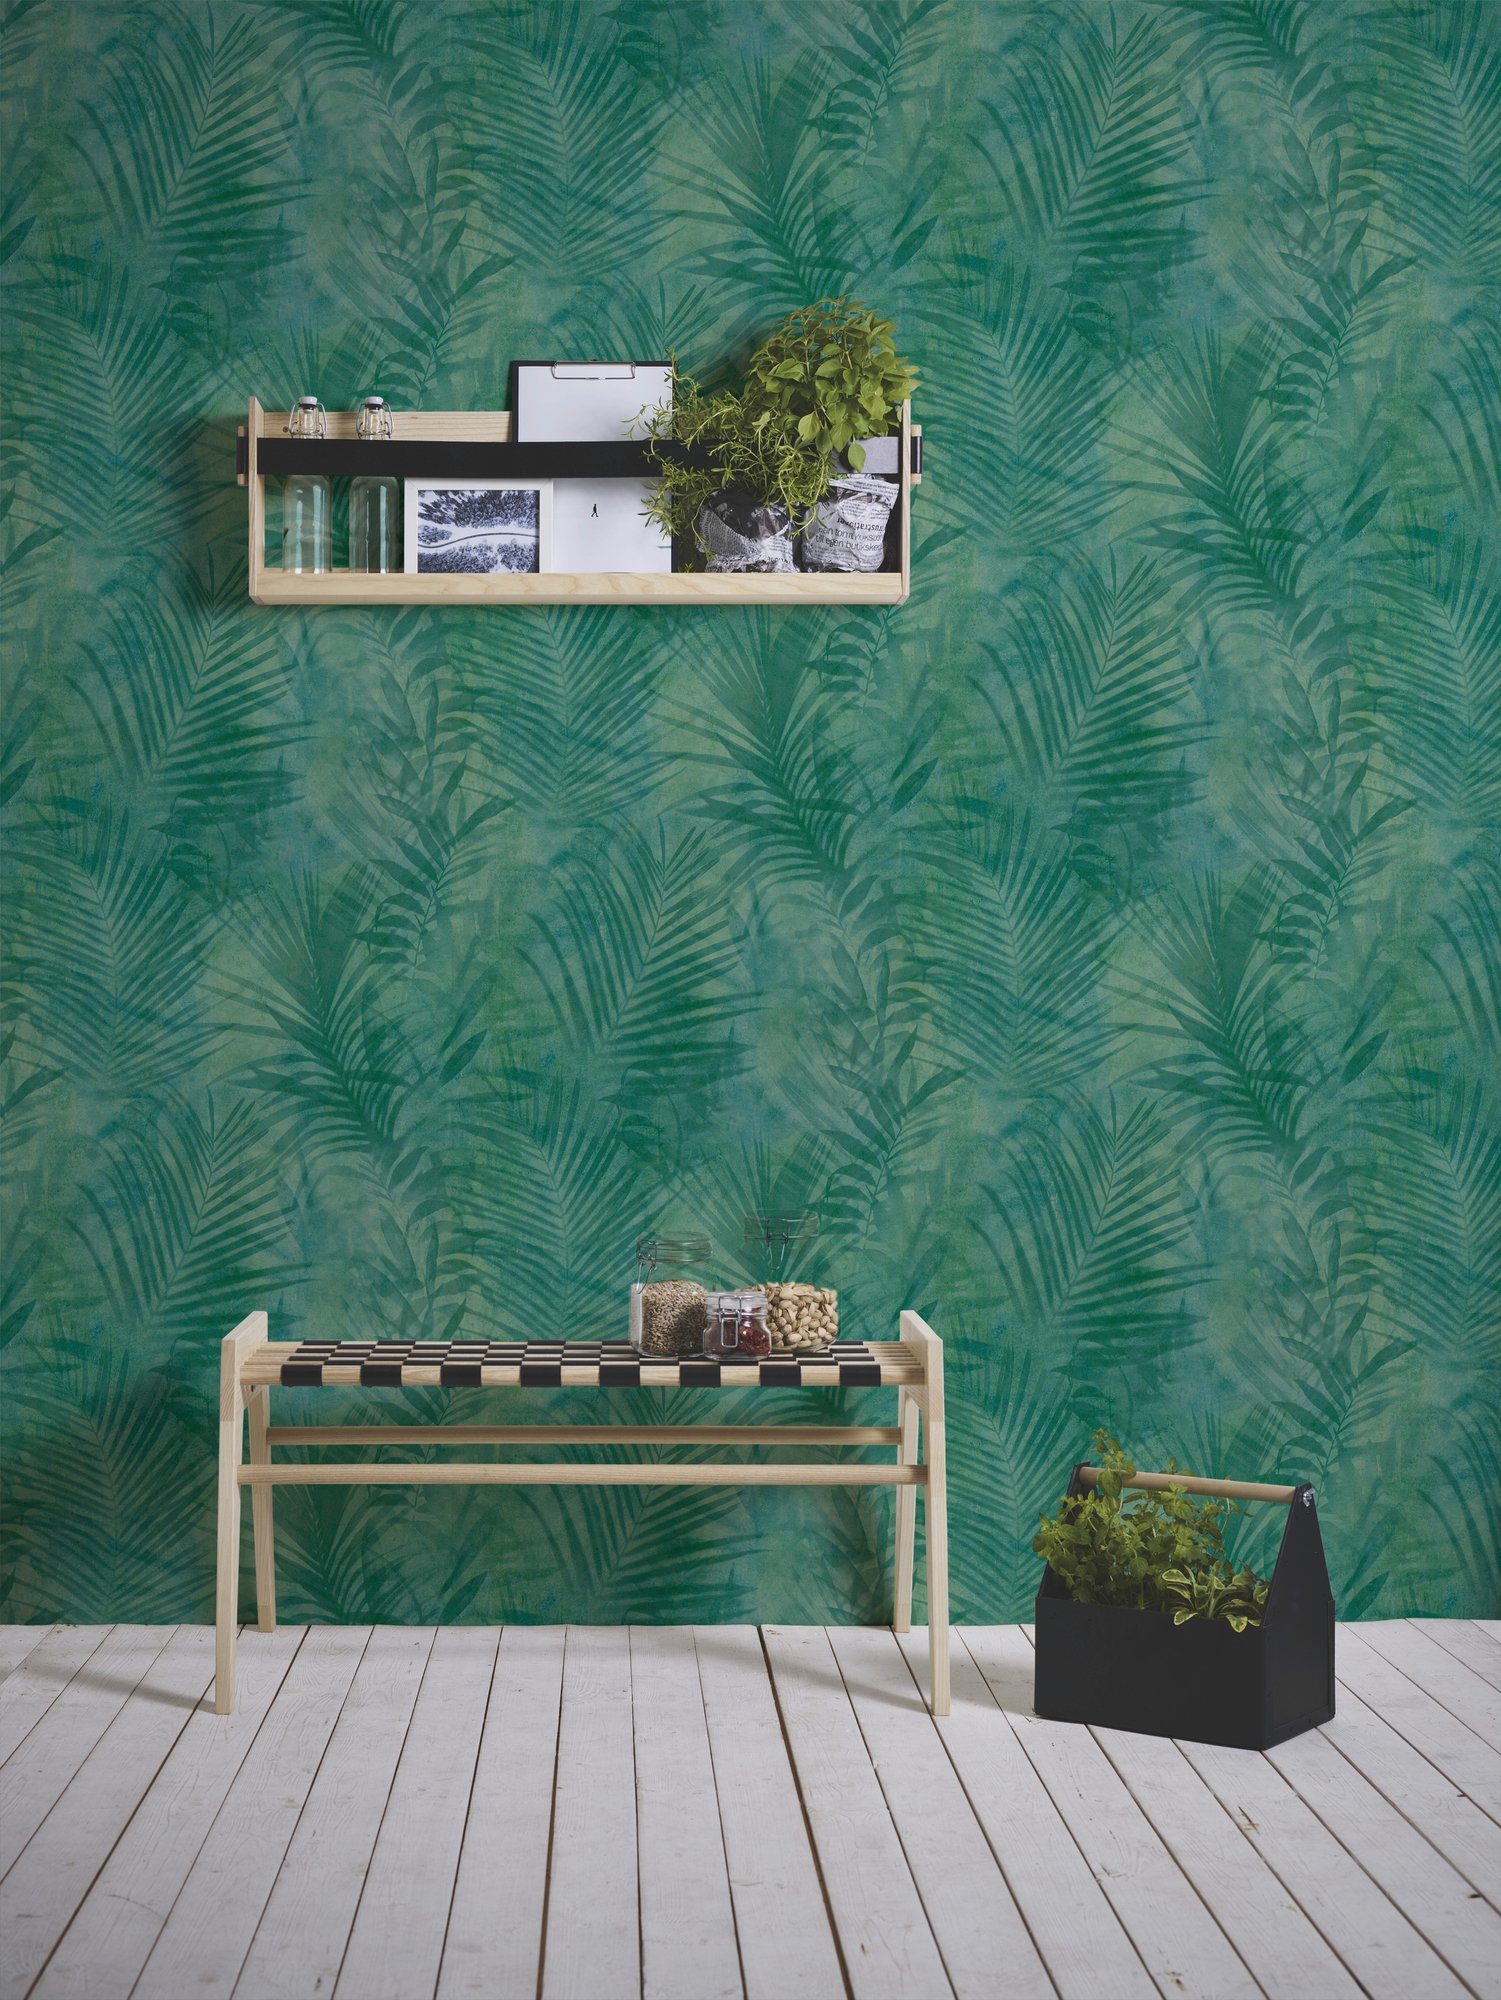 A.S. Tropical Palmenblättern, grün/blau floral, Dschungeltapete Tapete Création Bude Vliestapete 2.0 Palmen Neue mit Concret